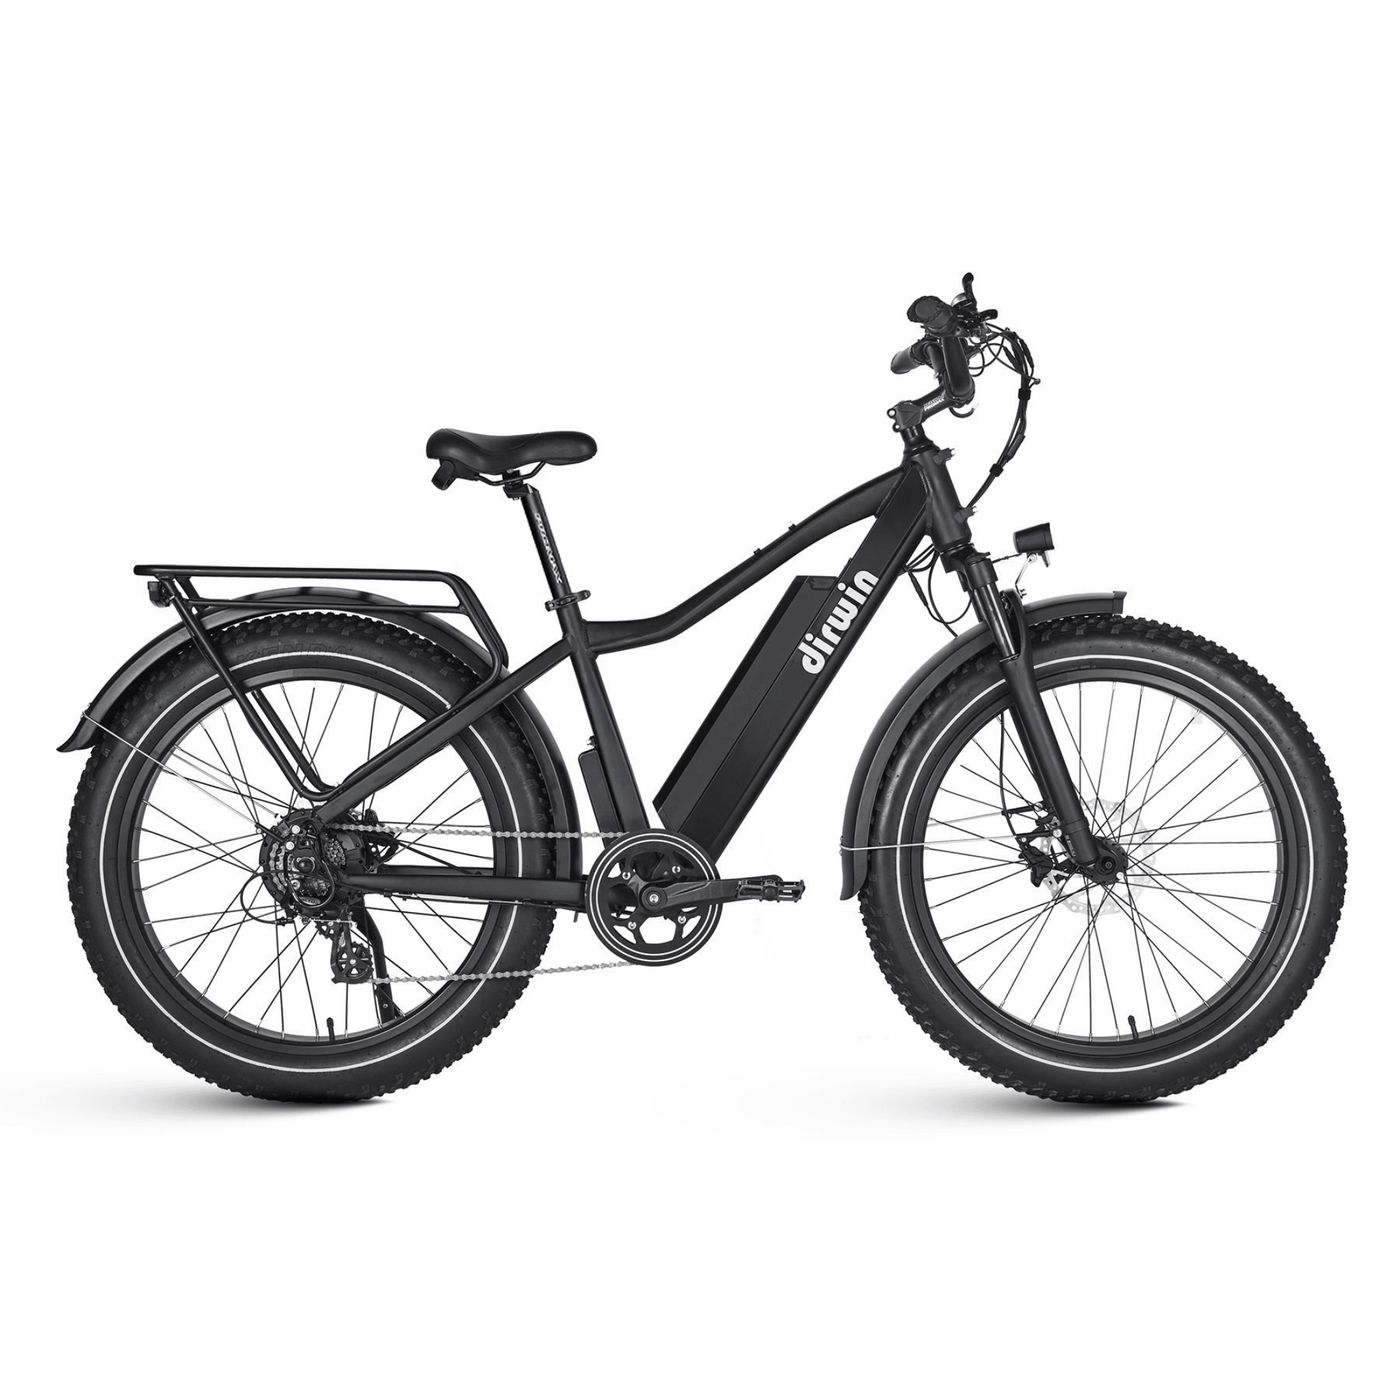 Dirwin Seeker All-Terrain Electric Bicycle Black